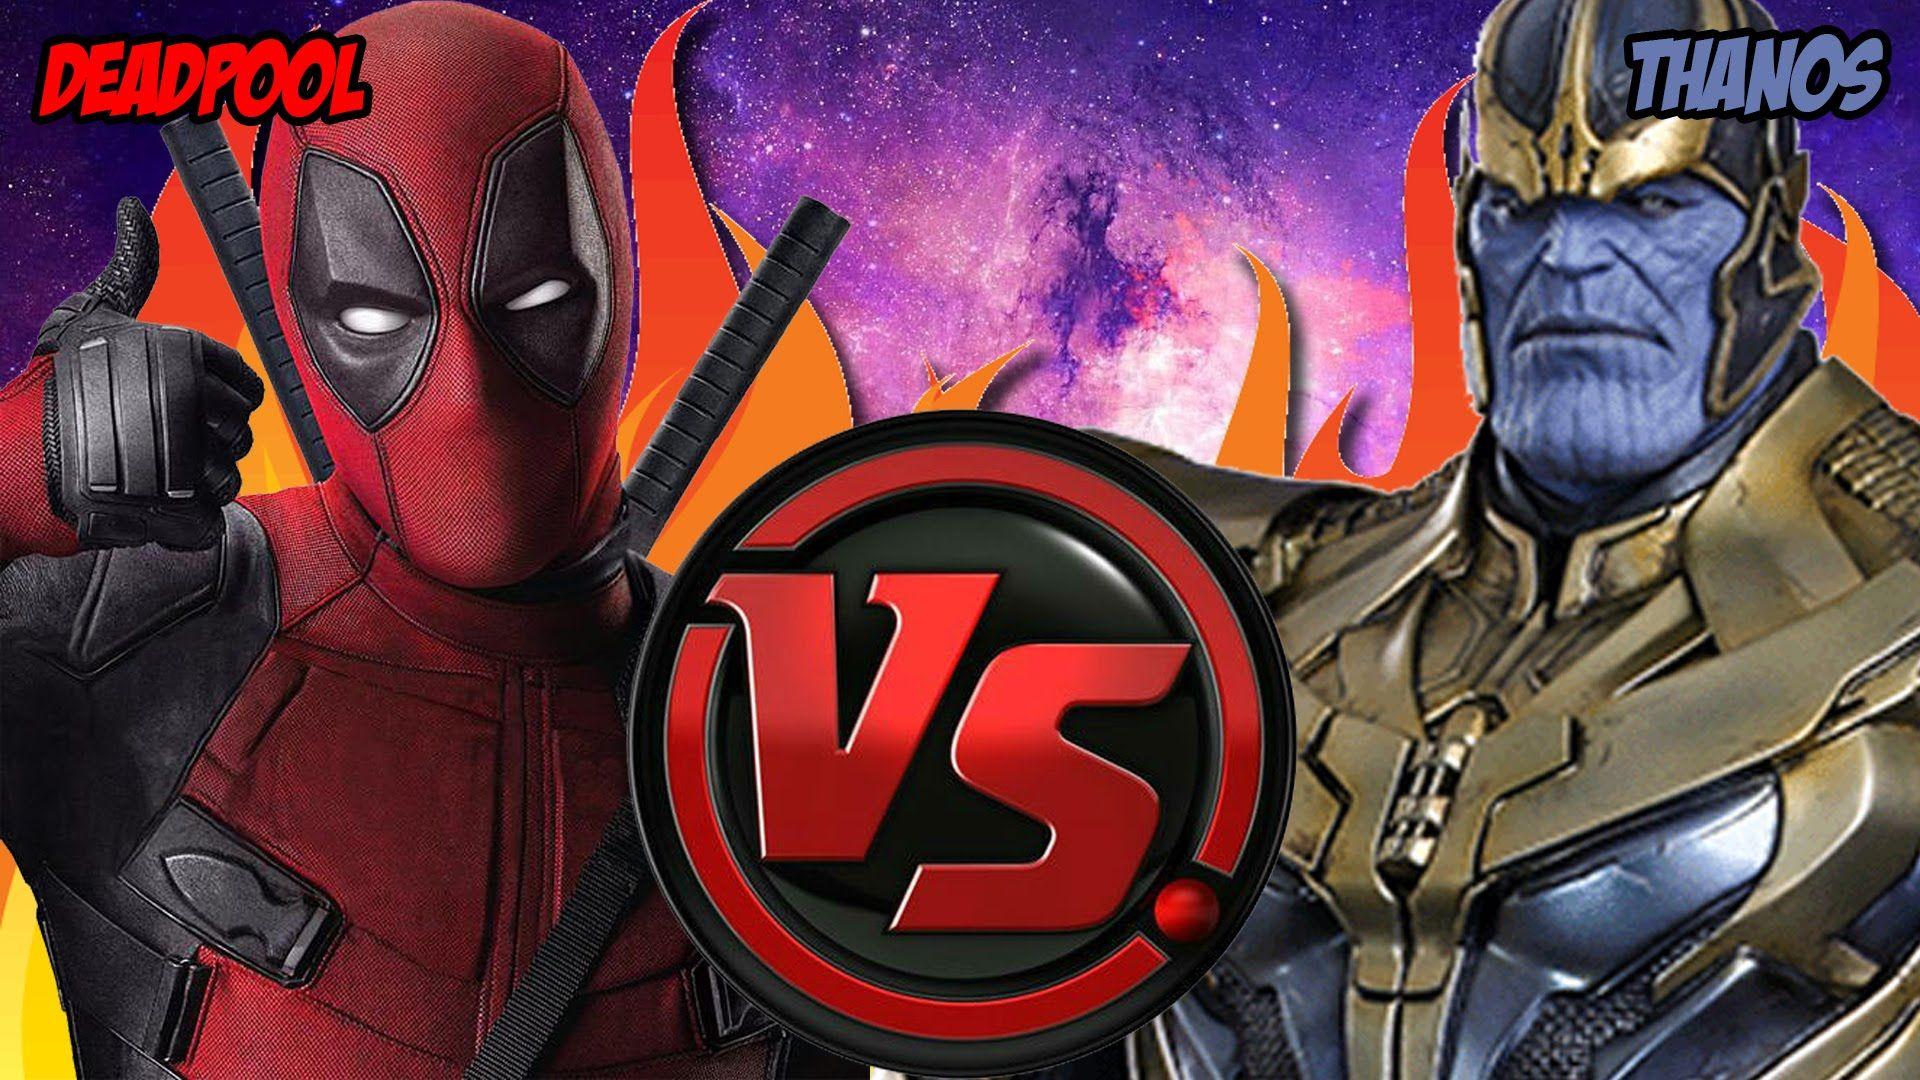 Deadpool VS. Thanos (who's win?) - [Mugen AI Battle]